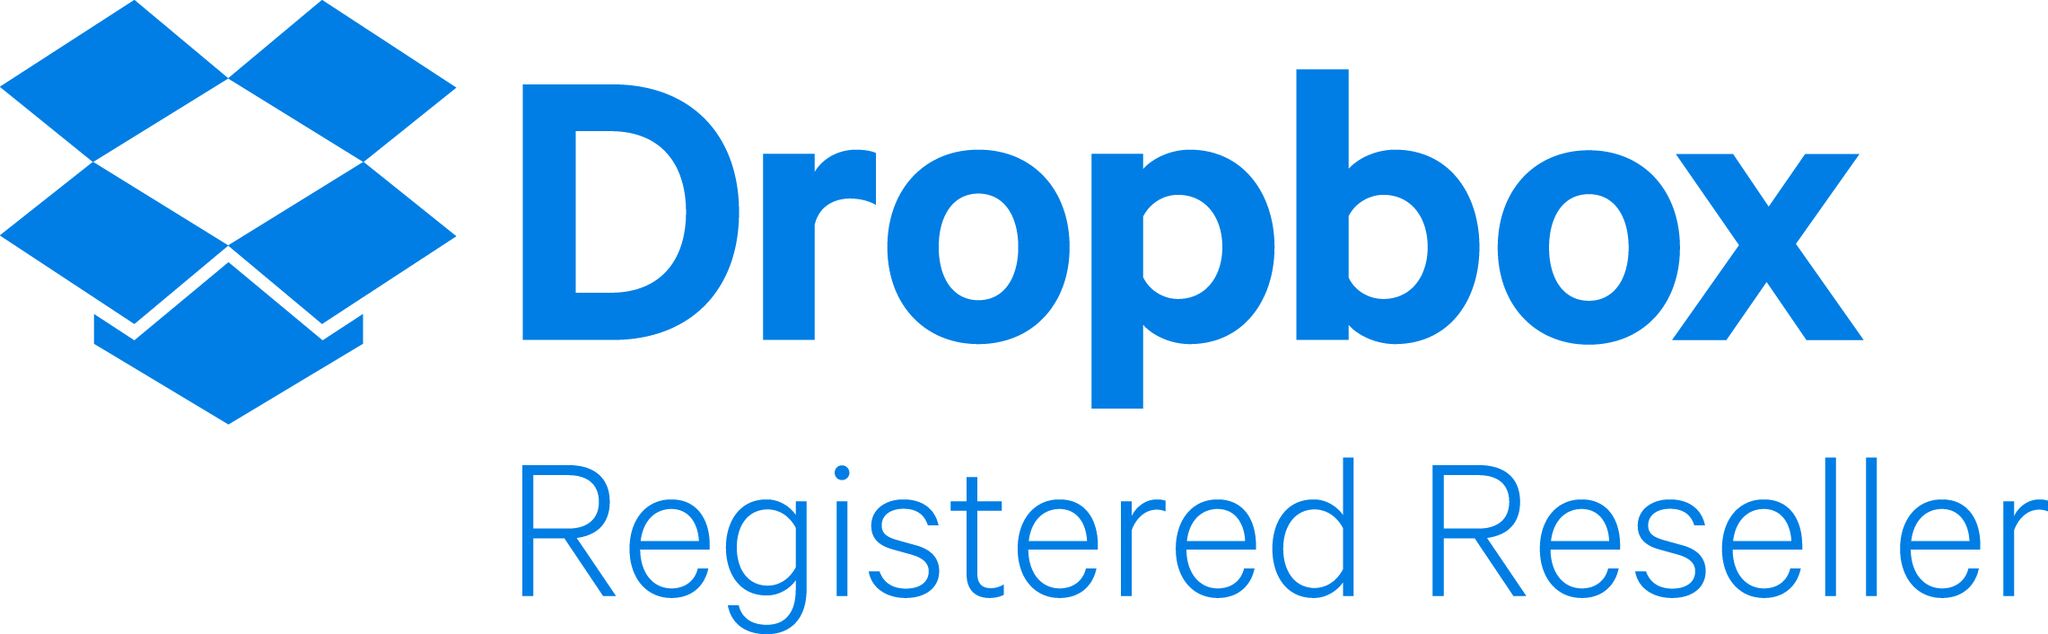 Dropbox Registered Reseller